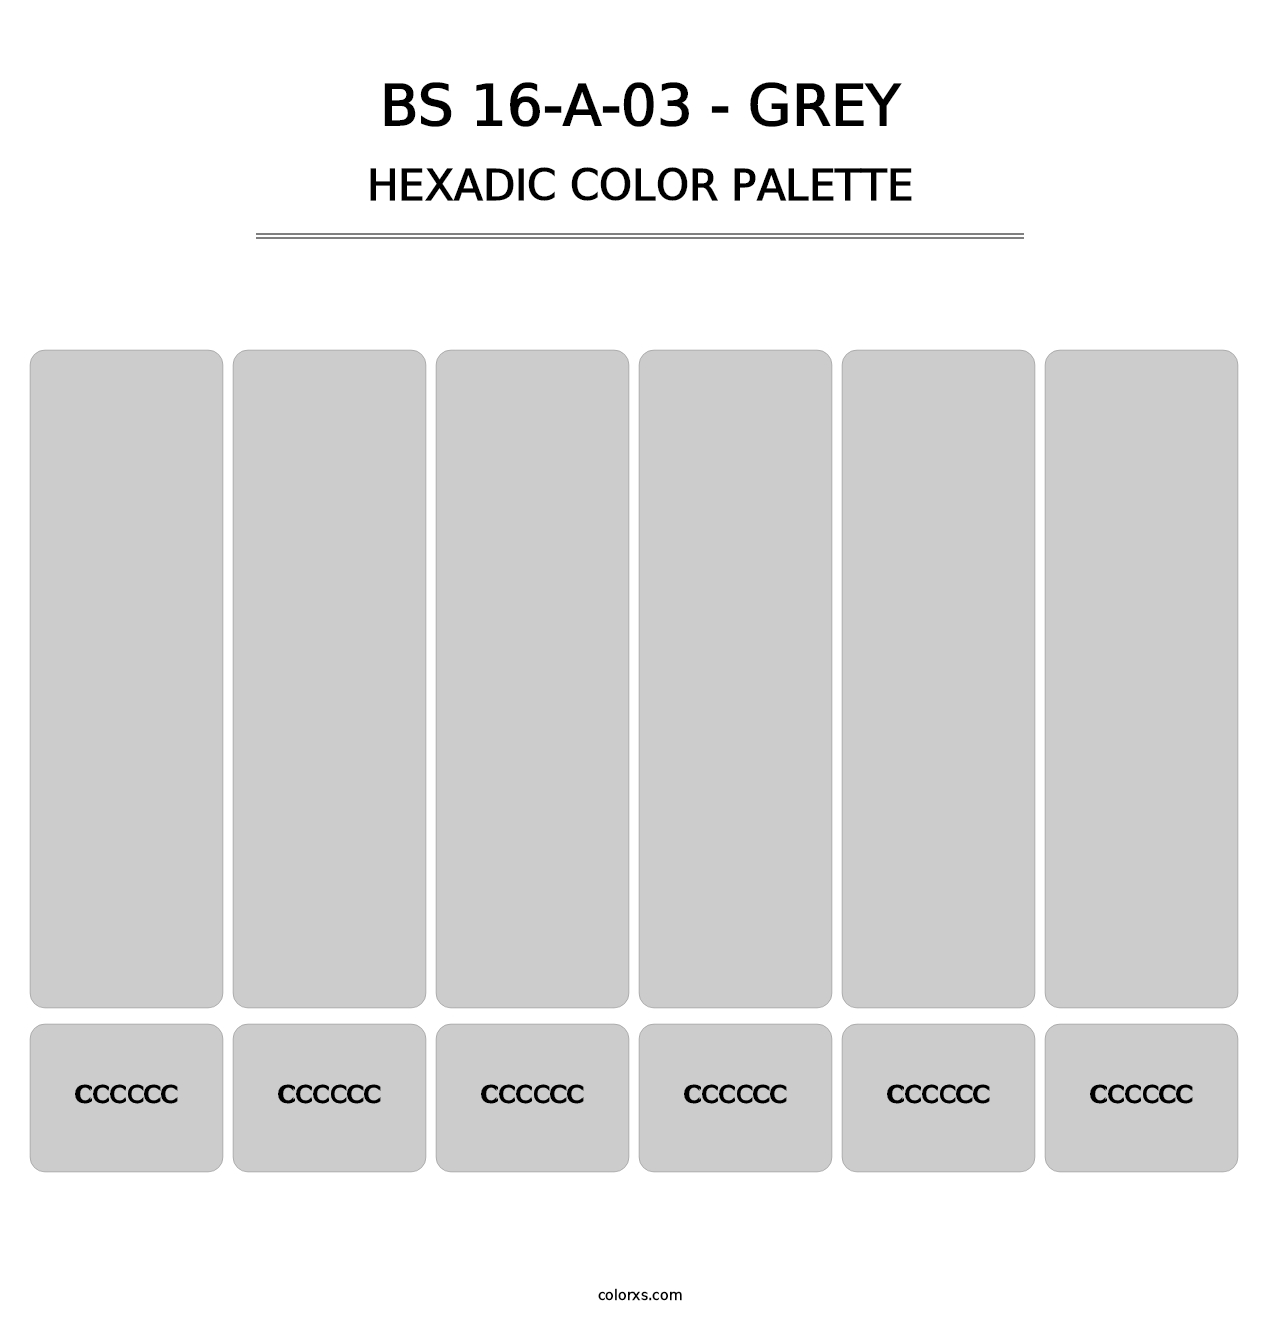 BS 16-A-03 - Grey - Hexadic Color Palette